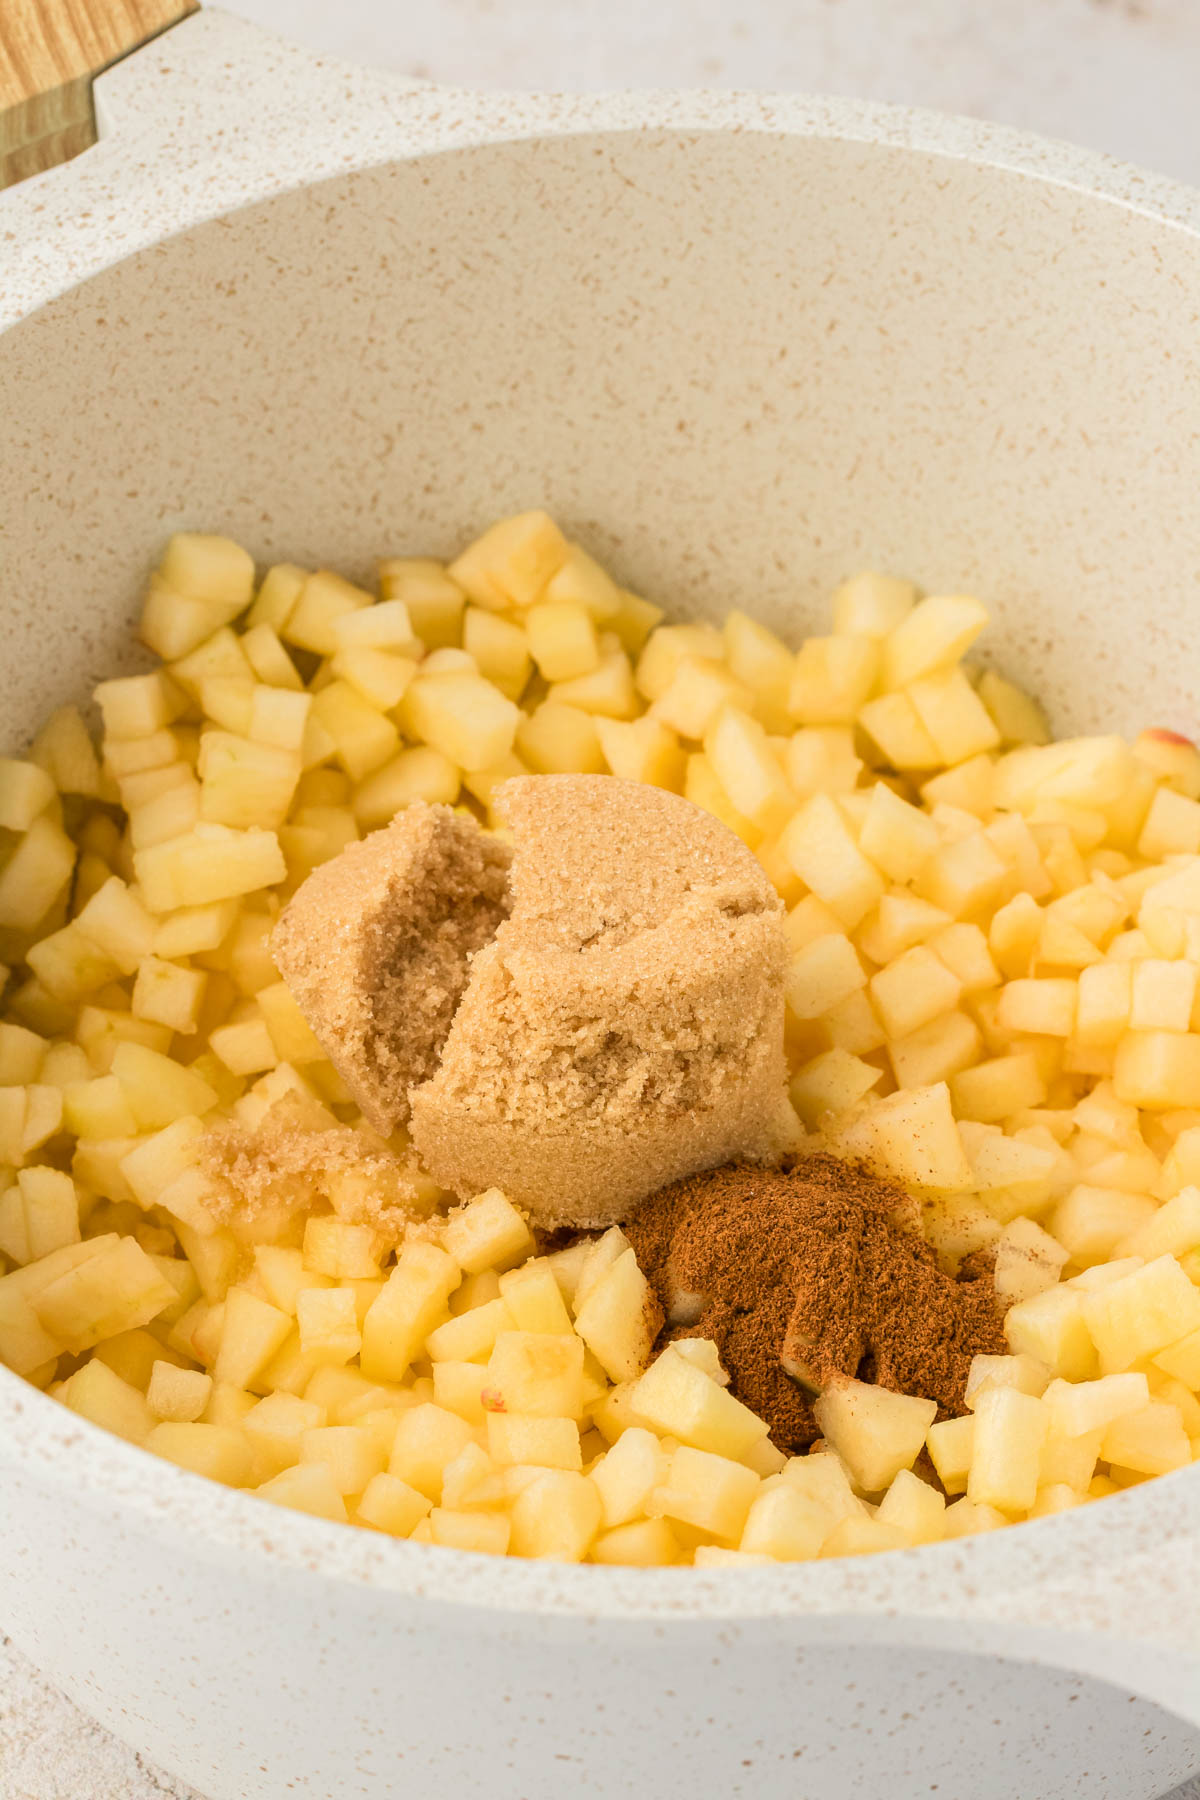 Chopped apples, brown sugar, and cinnamon in a small saucepan.